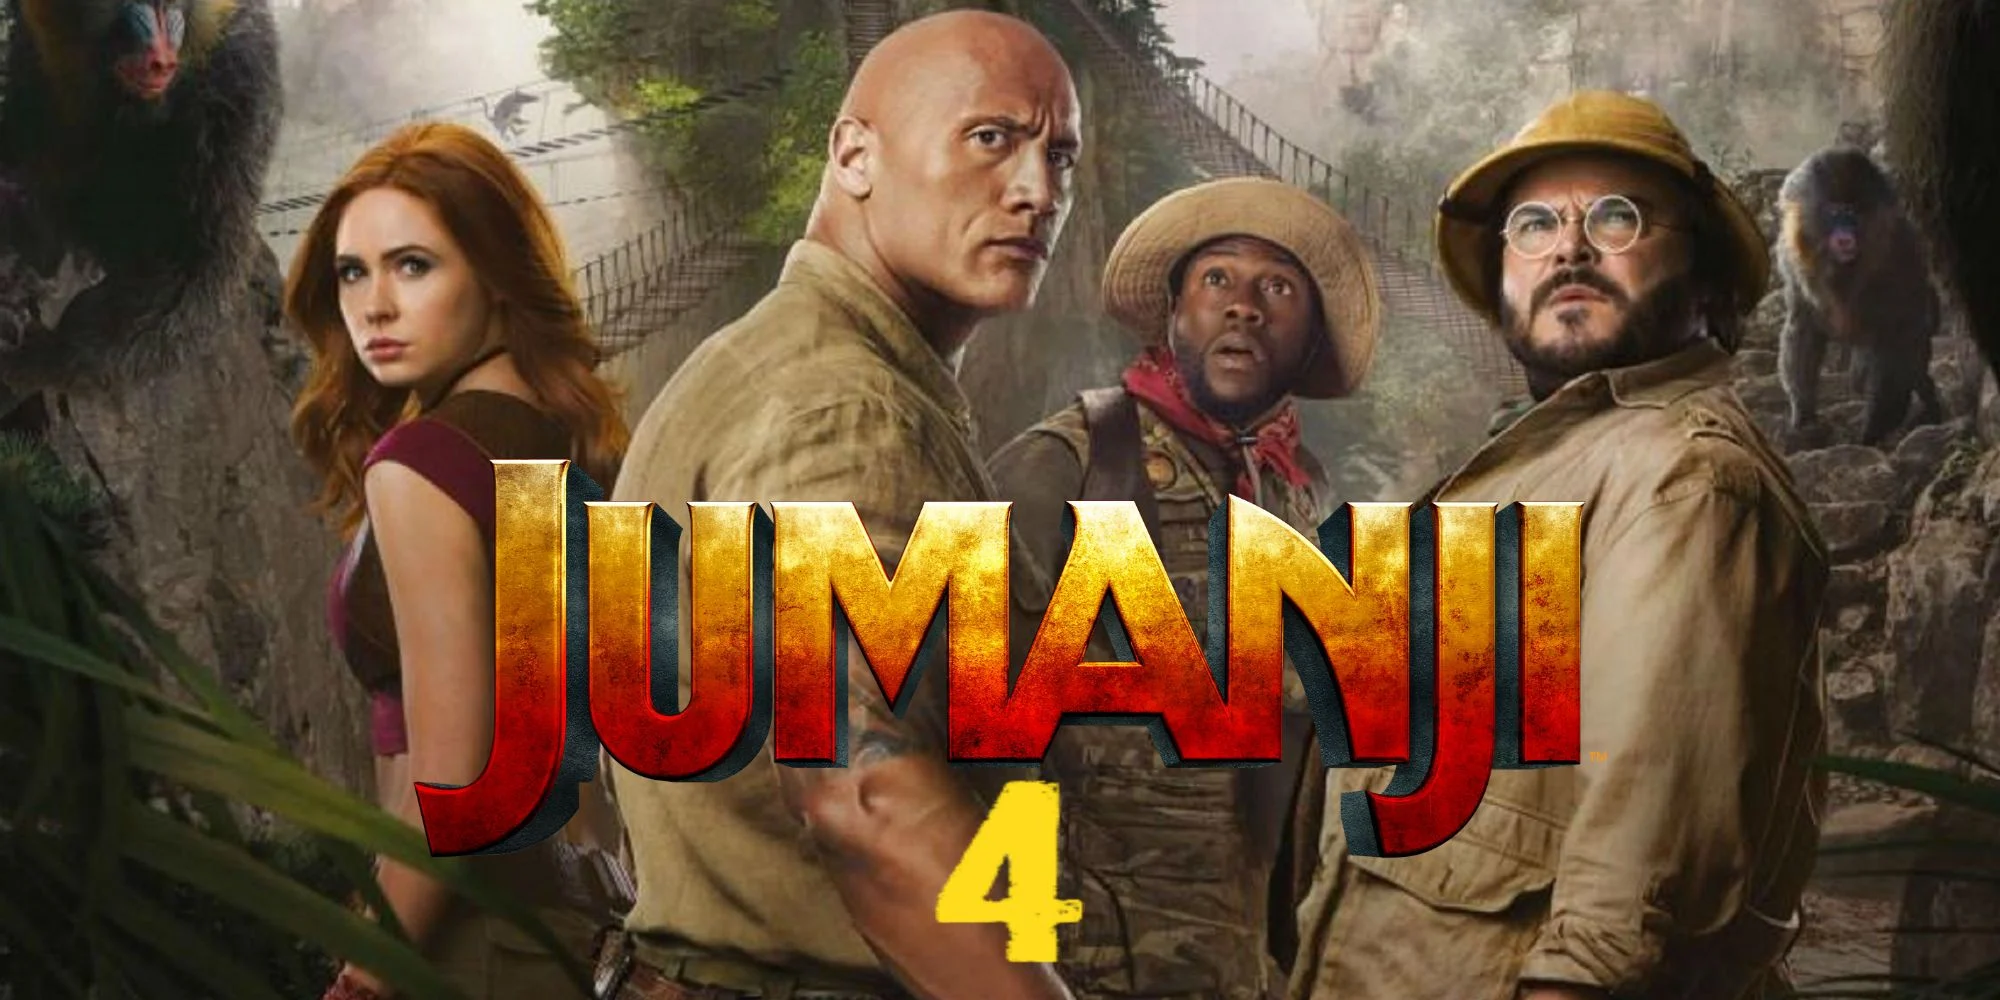 Jumanji 4 Release Date, Spoilers, Cast & More